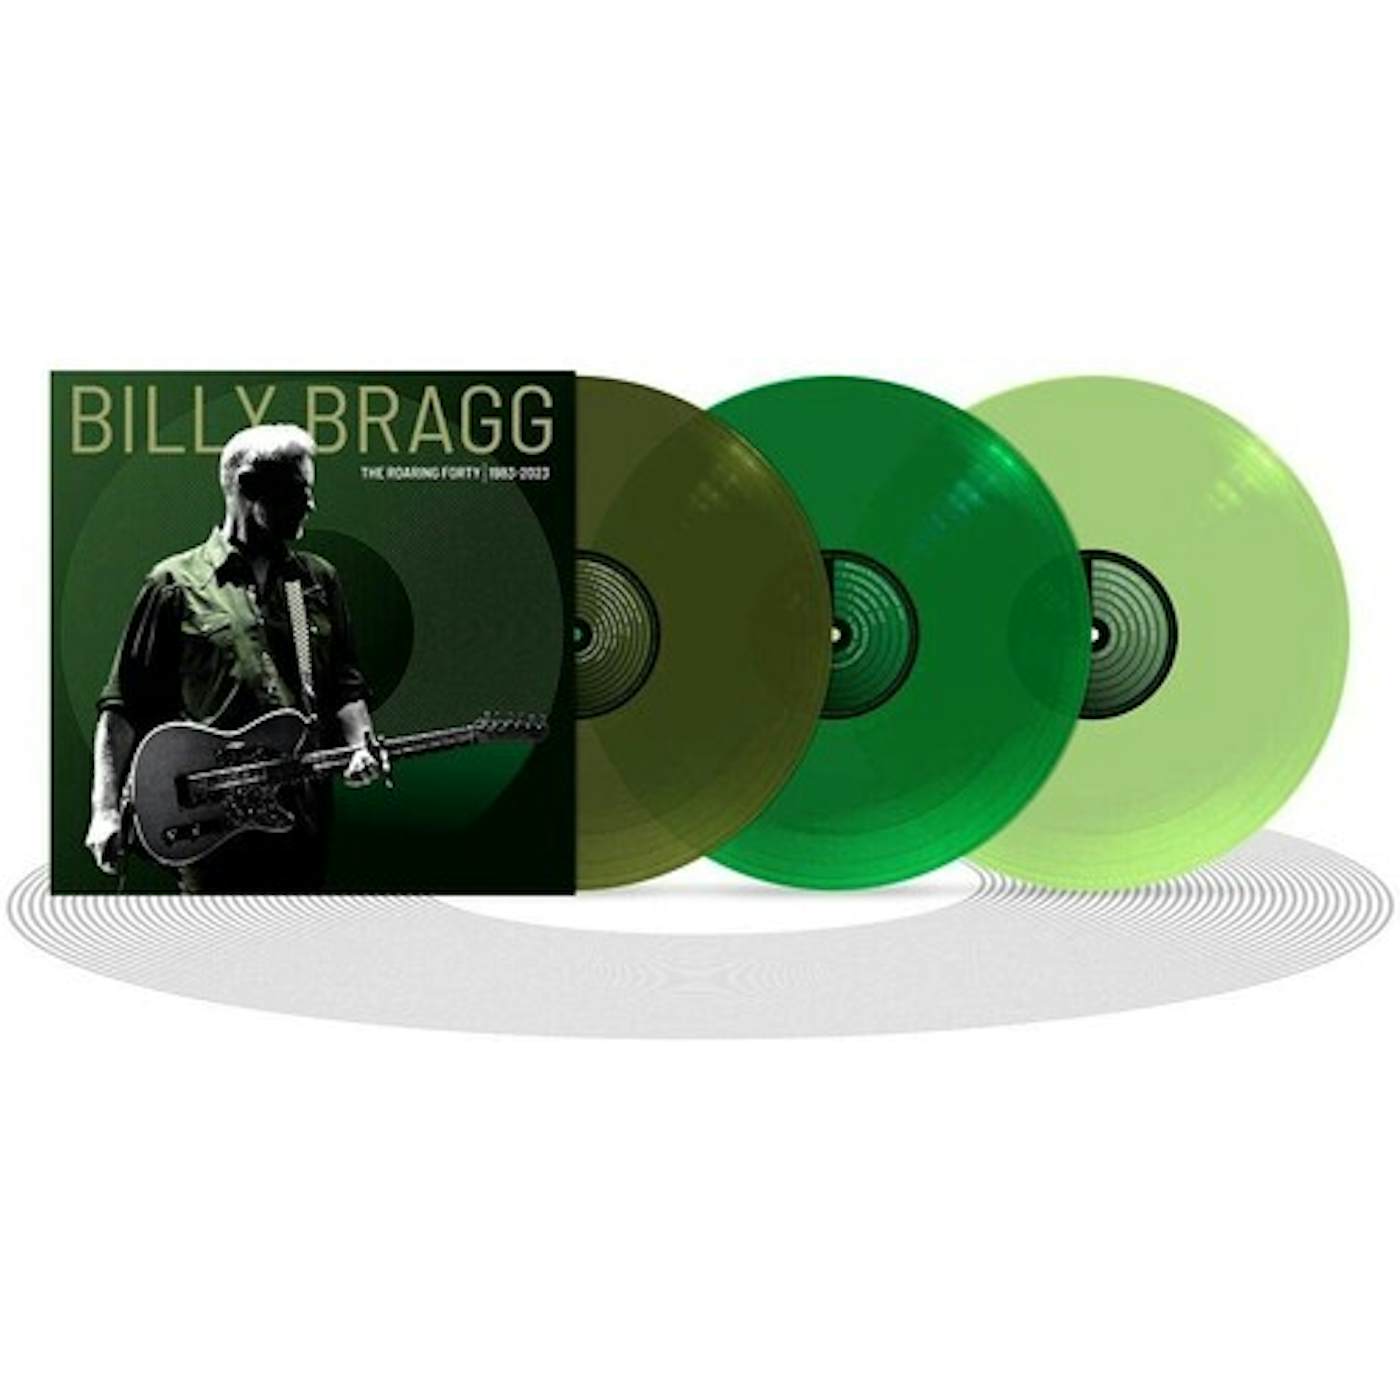 Billy Bragg ROARING FORTY 1983-2023 Vinyl Record